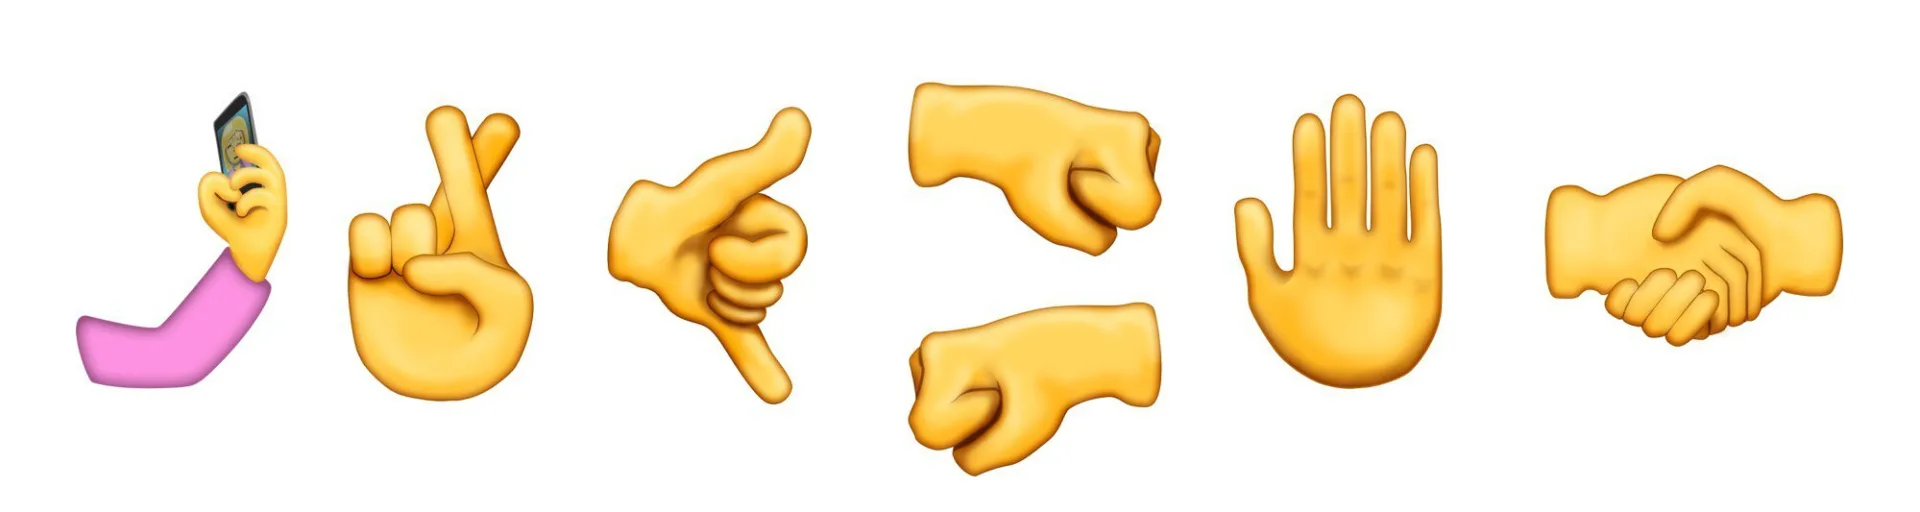 Unicode 9 emoji gestures emojipedia sample images1